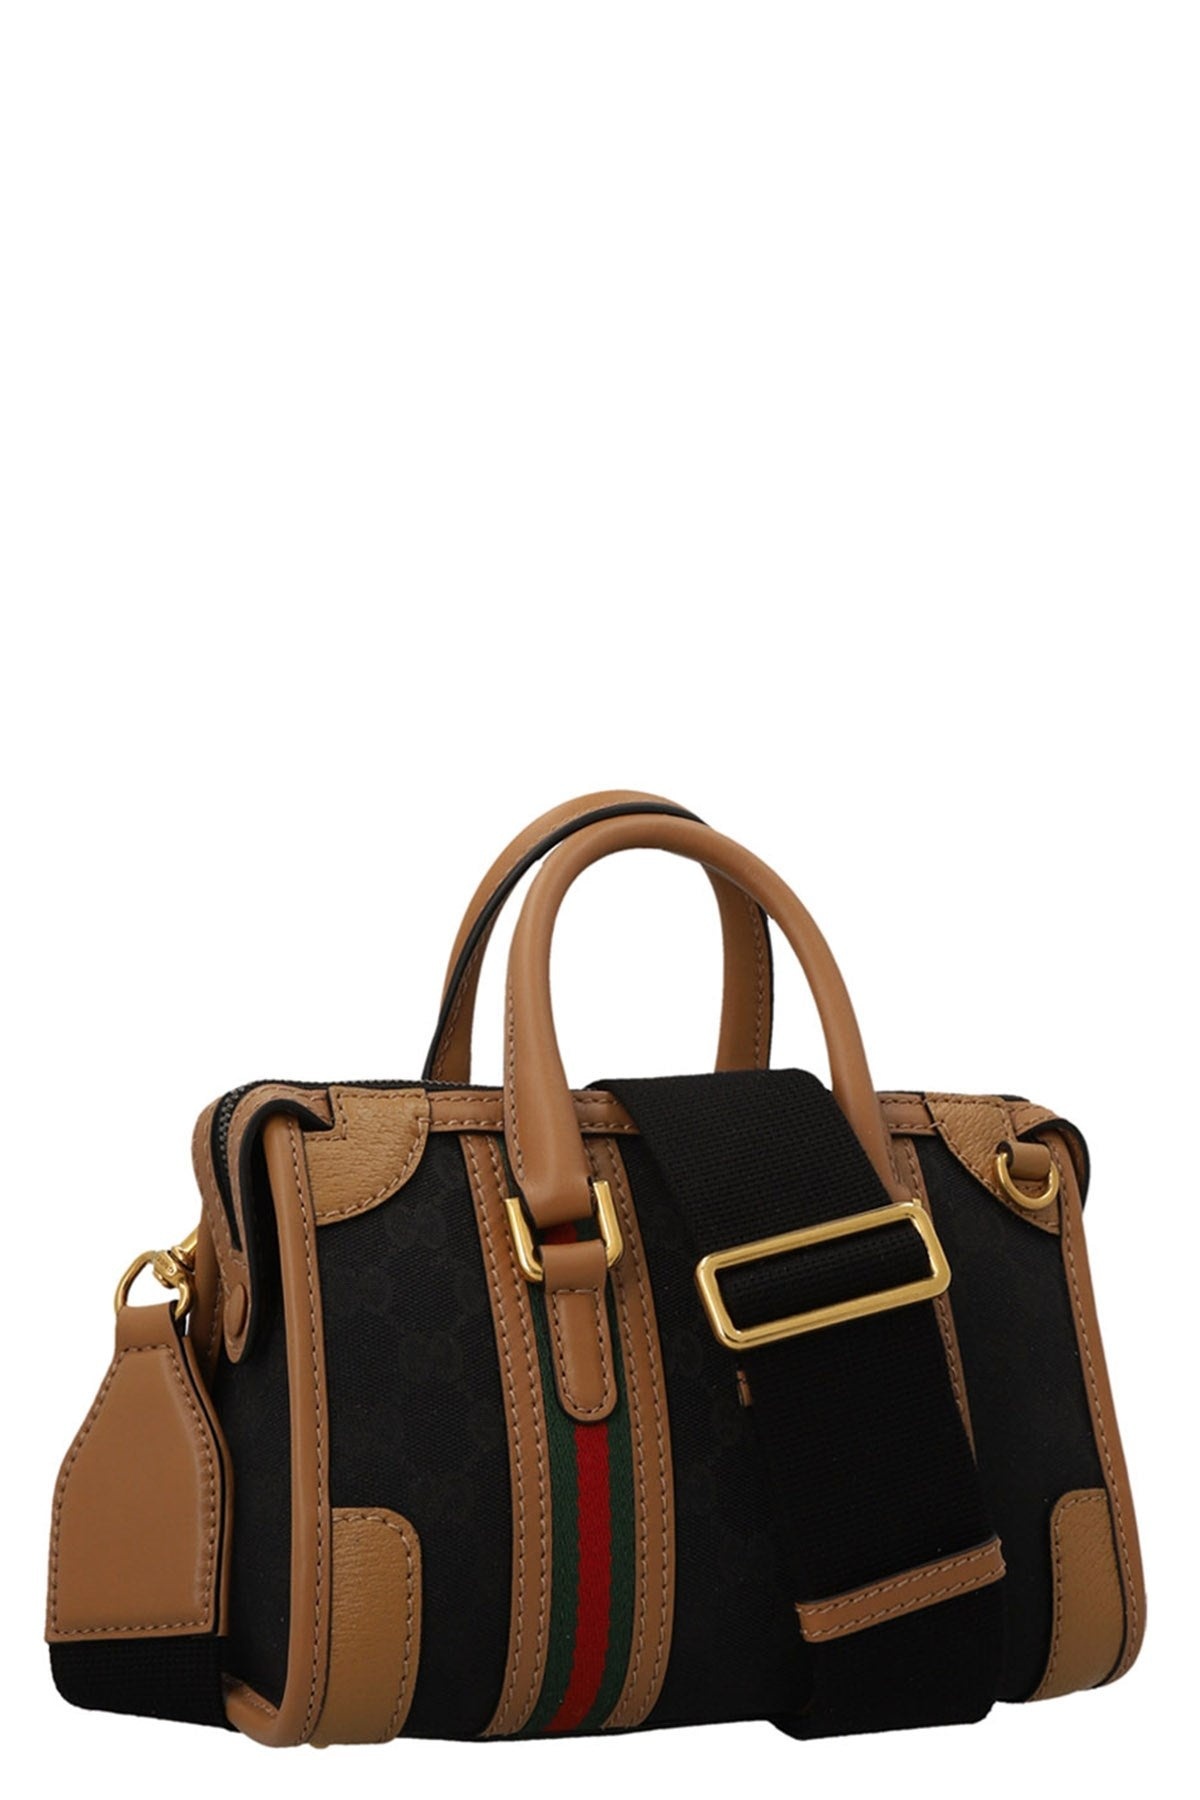 Gucci Women 'Original Gg' Mini Handbag - 2